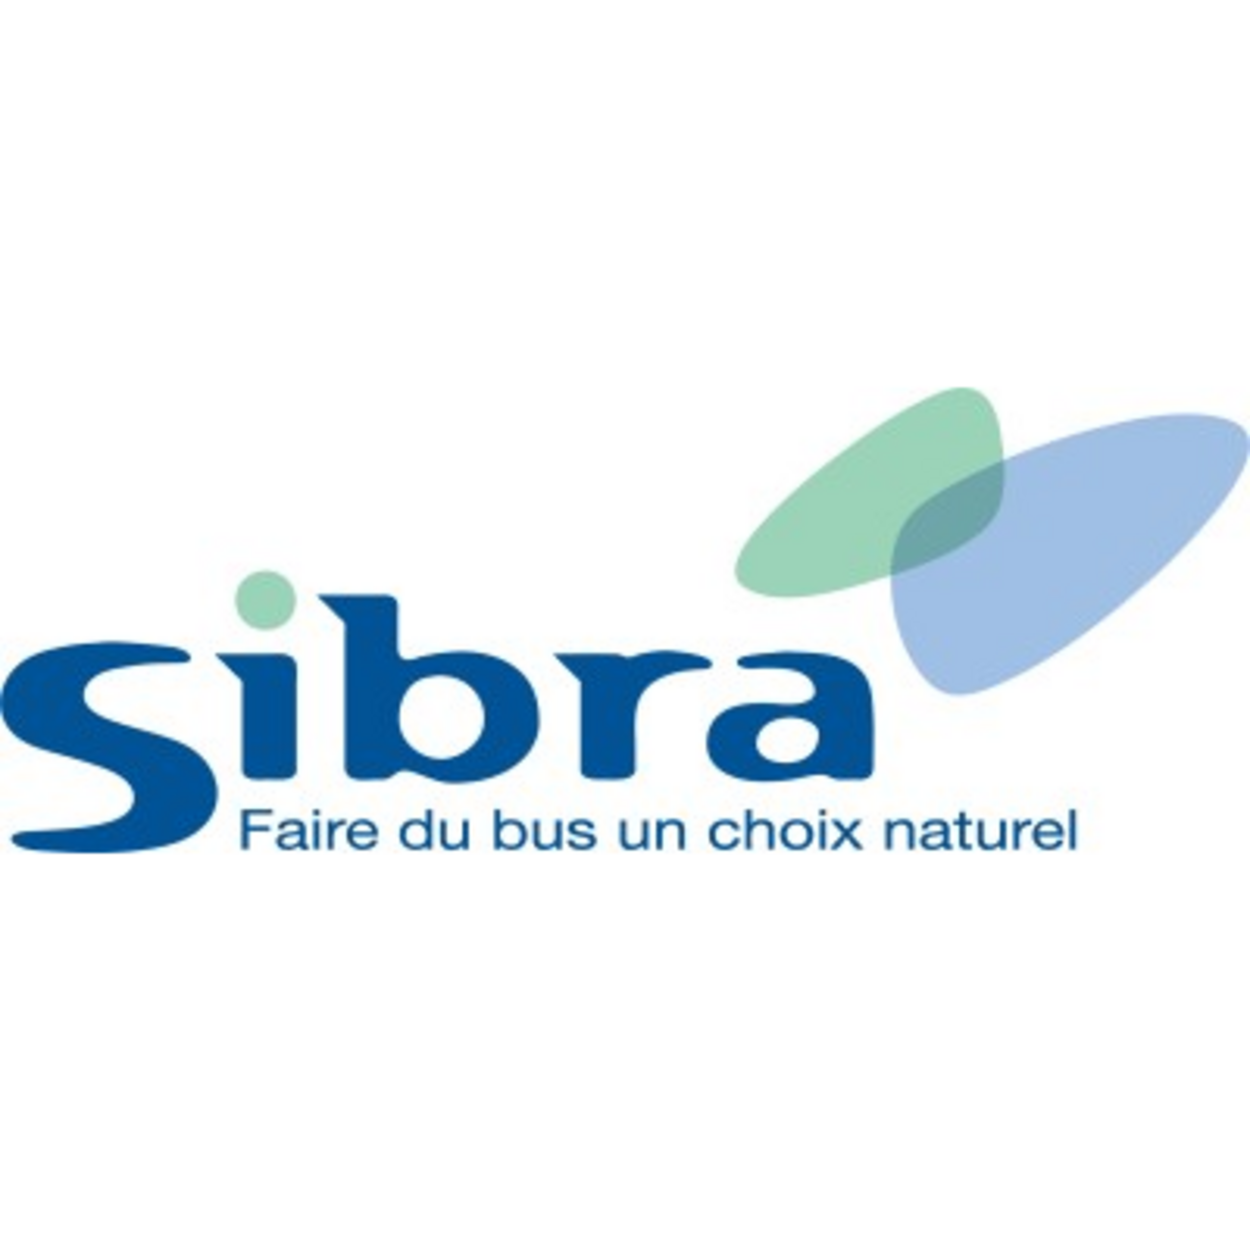 sibra logo bei Elku GmbH in Unterhaching